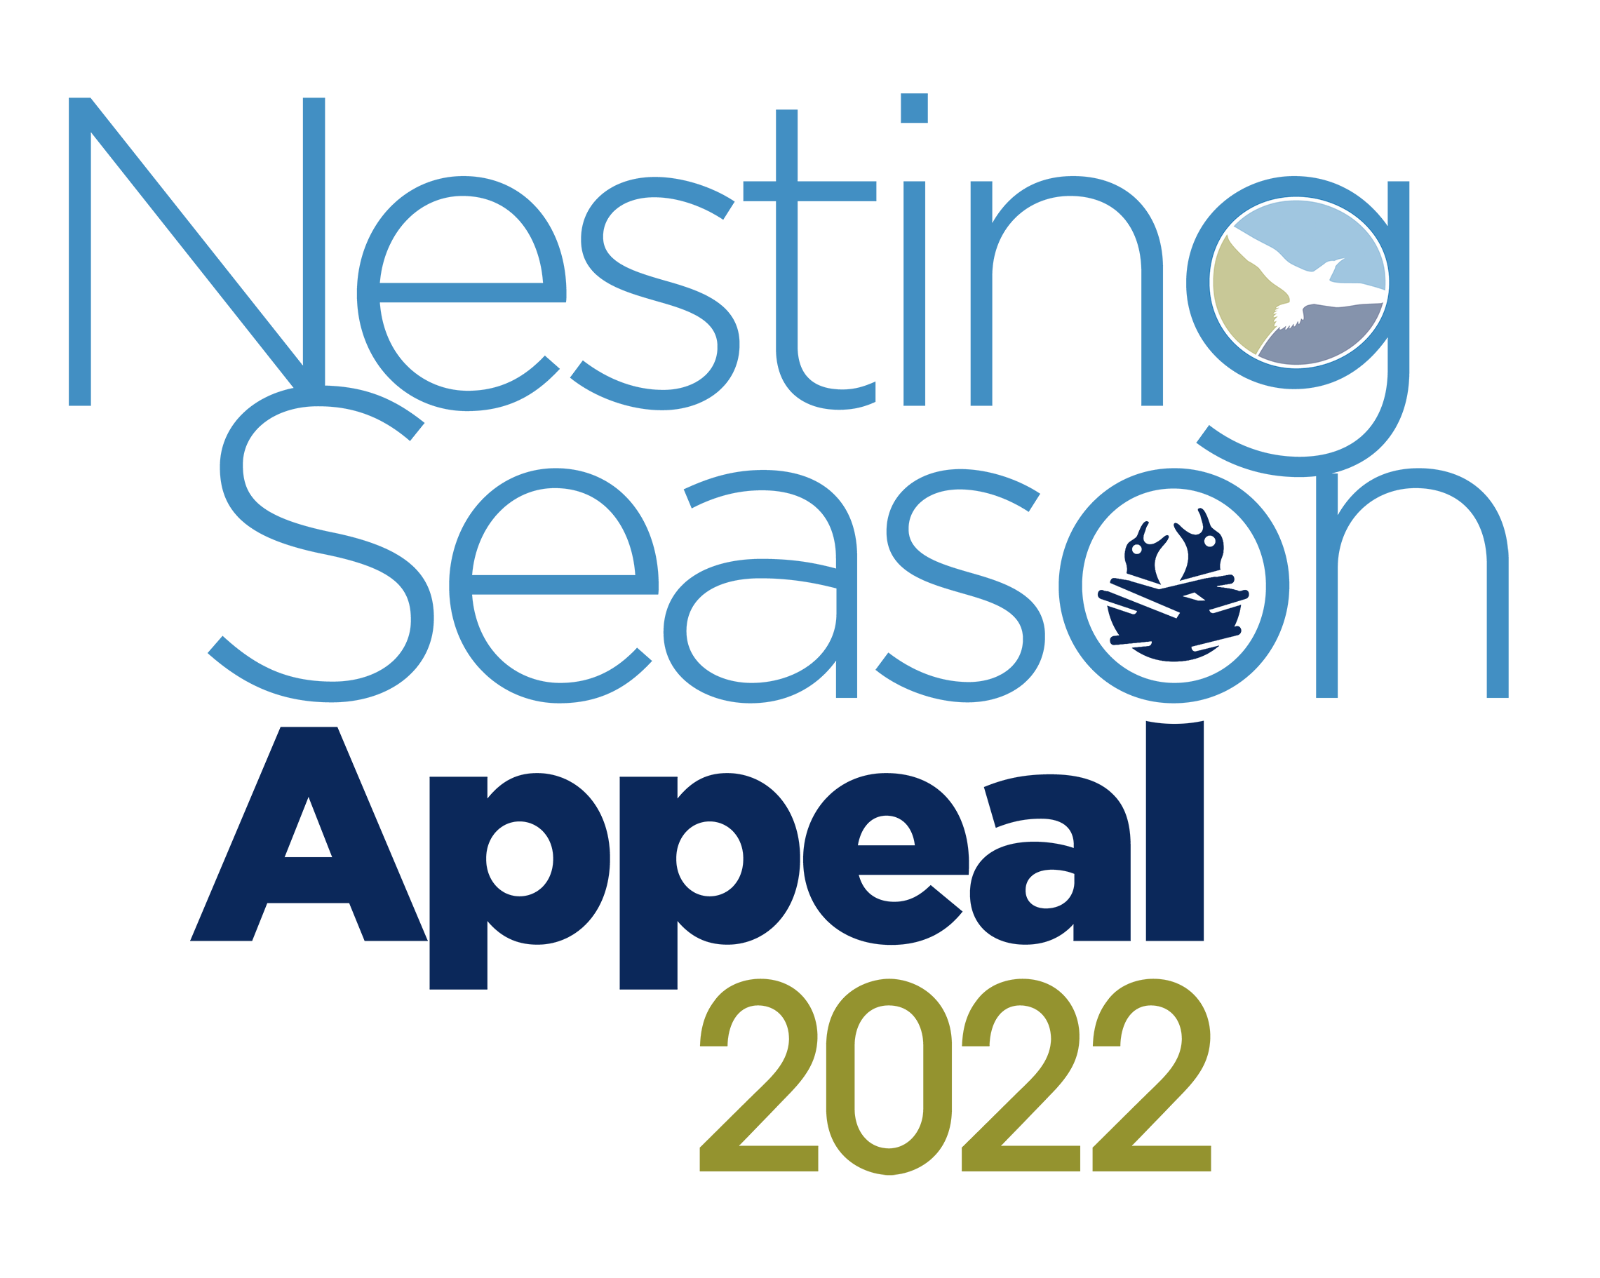 Nesting%20Season%20Appeal%202022%20logo.png